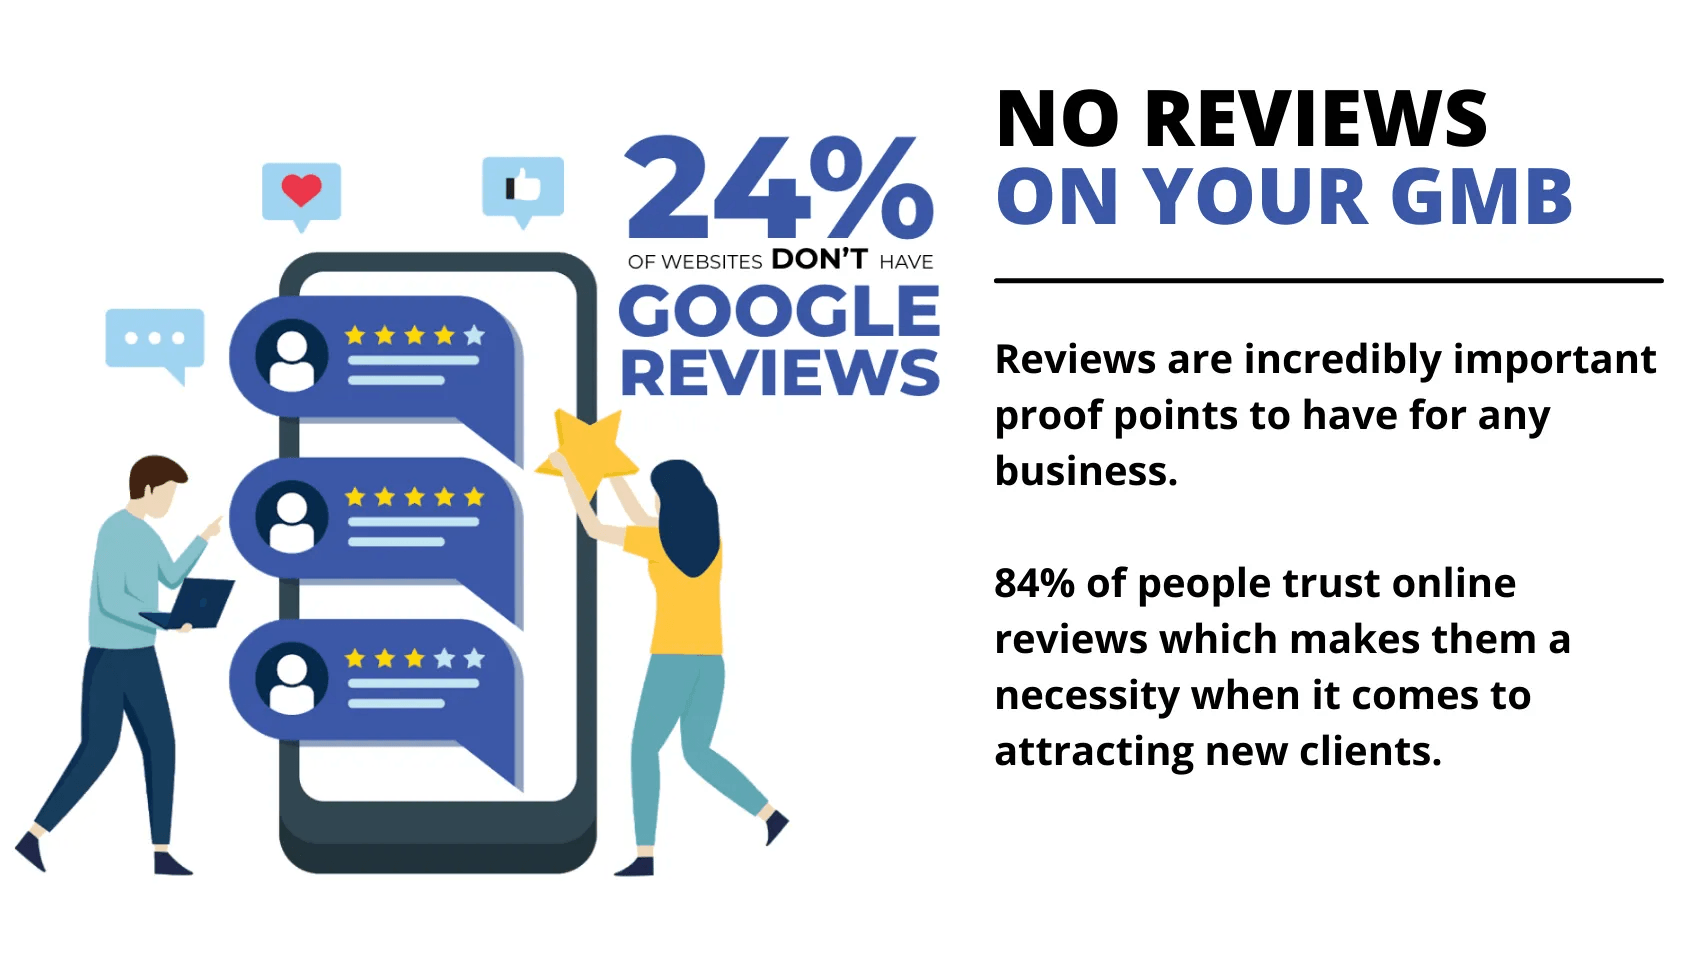 24% of websites don't have google reviews